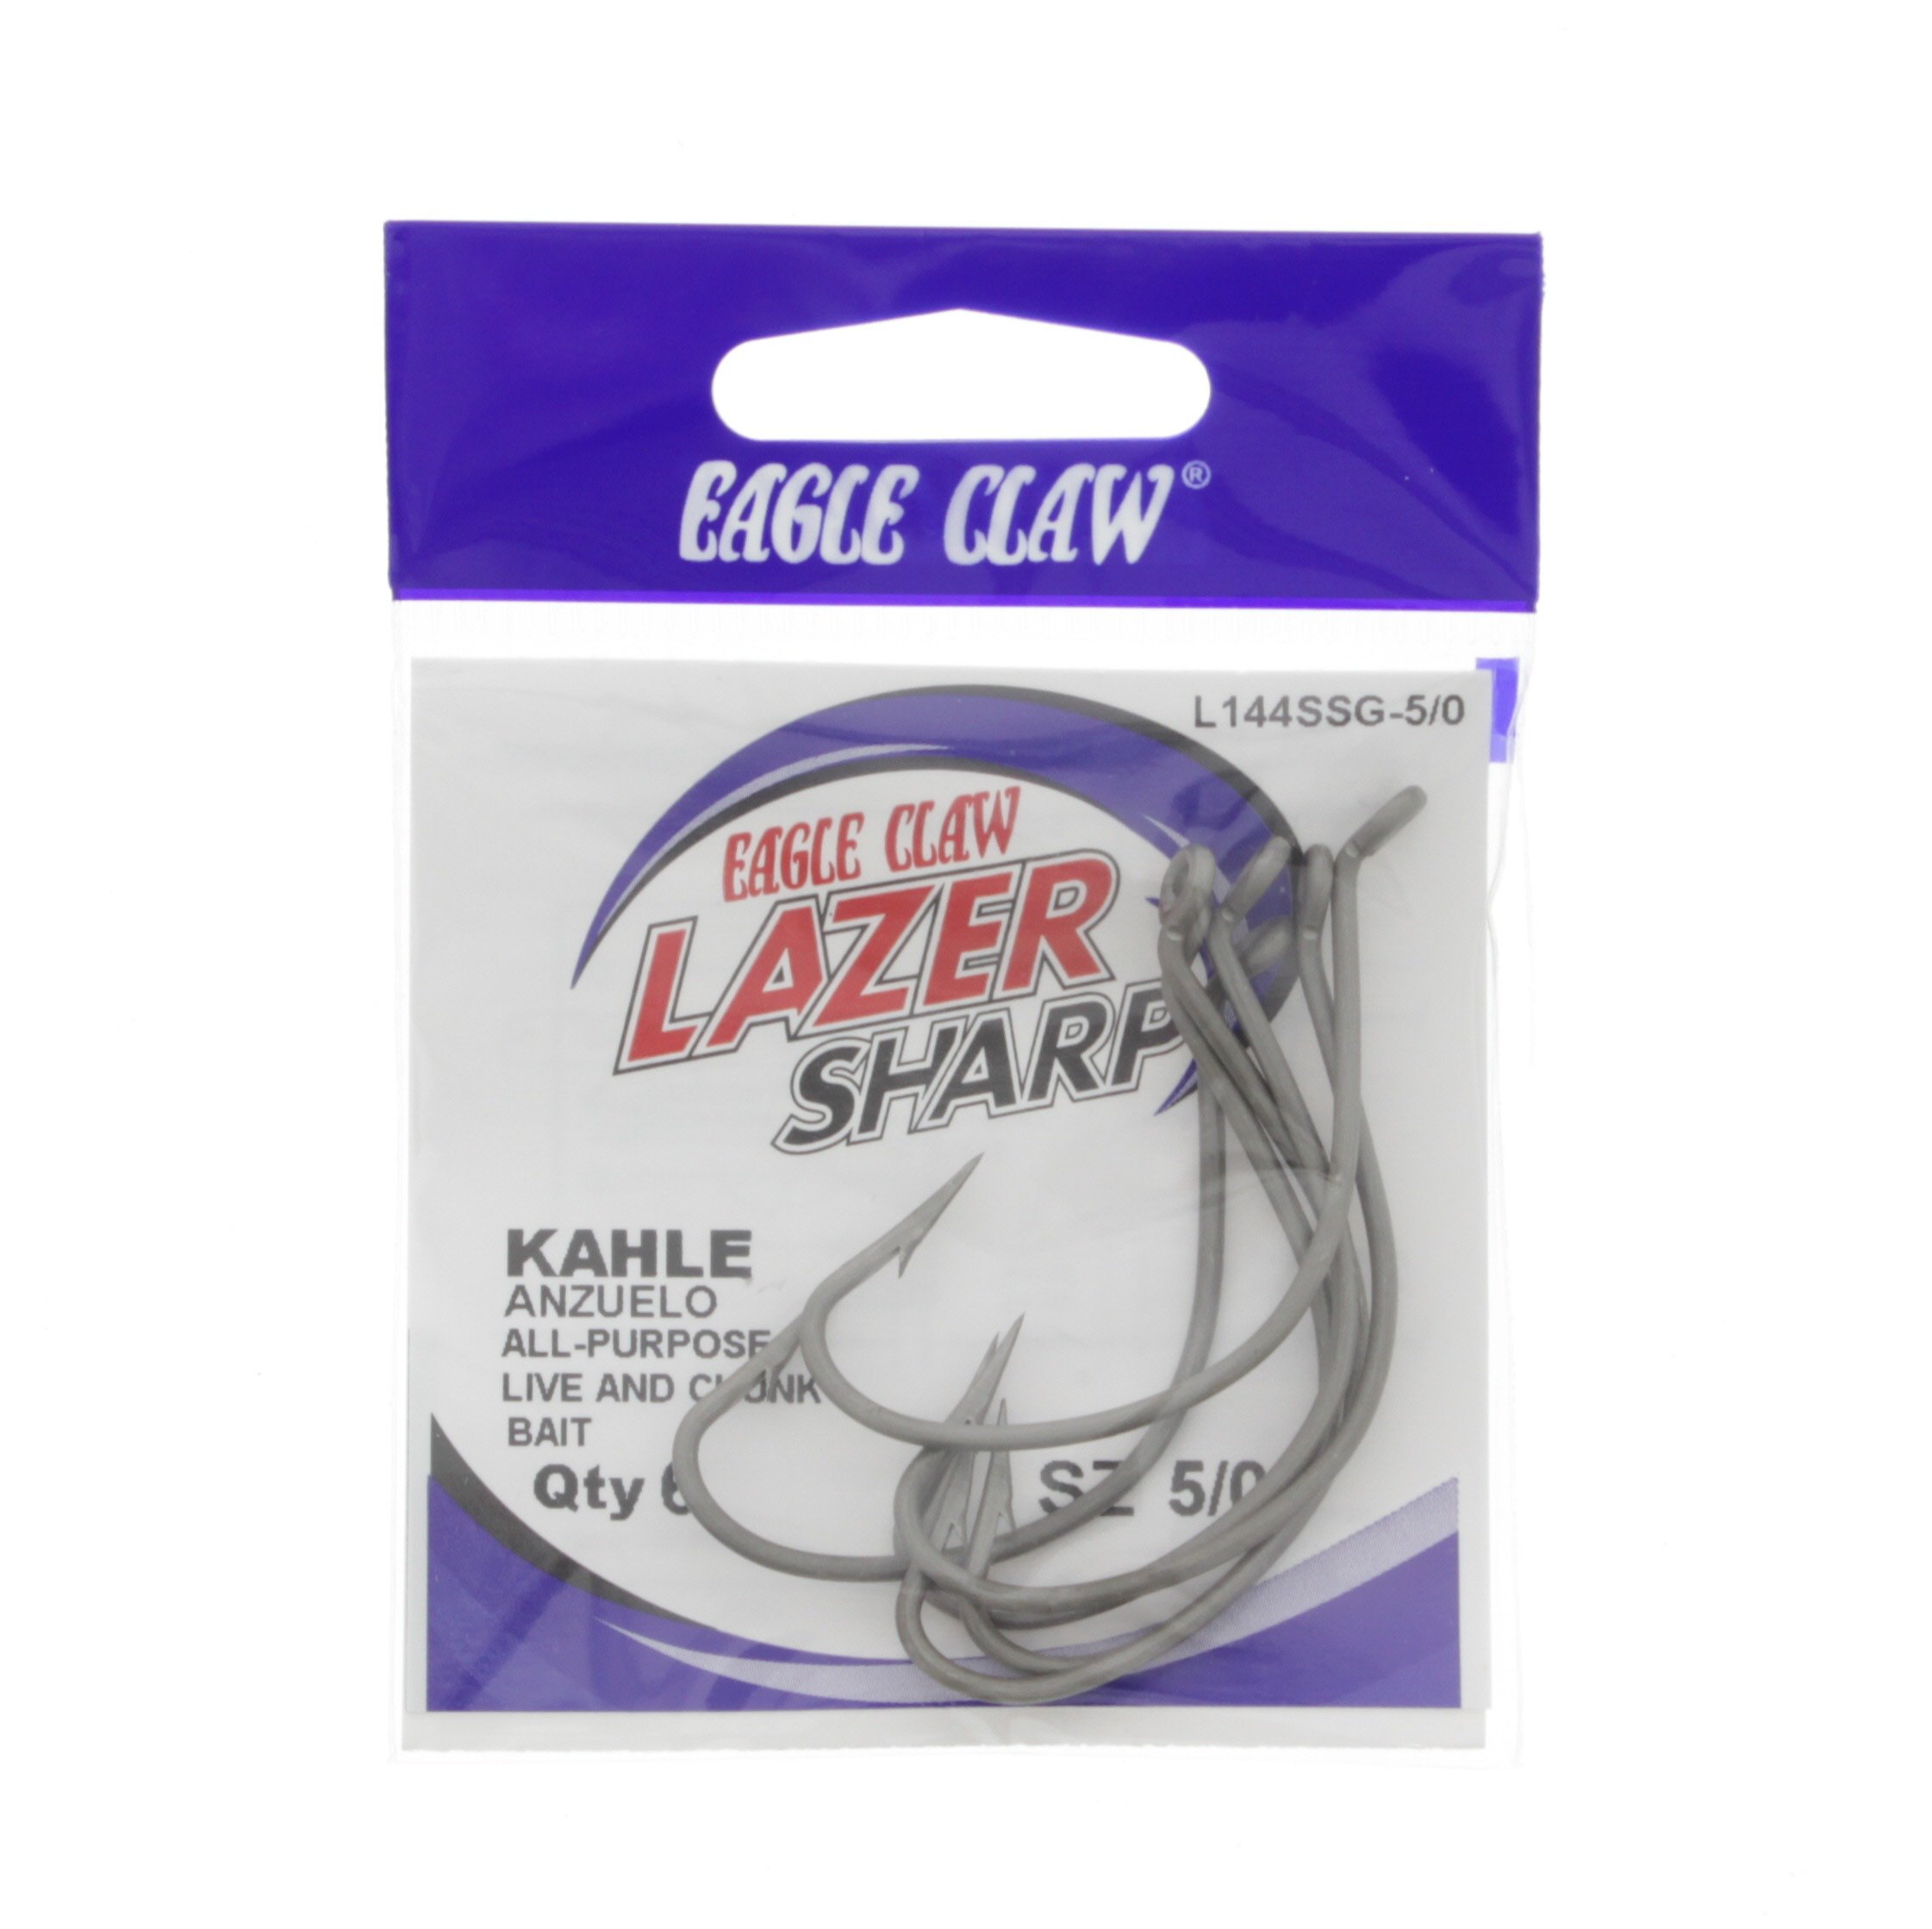 Eagle Claw Lazer Kahle Hook, Size 5/0 - Shop Fishing at H-E-B